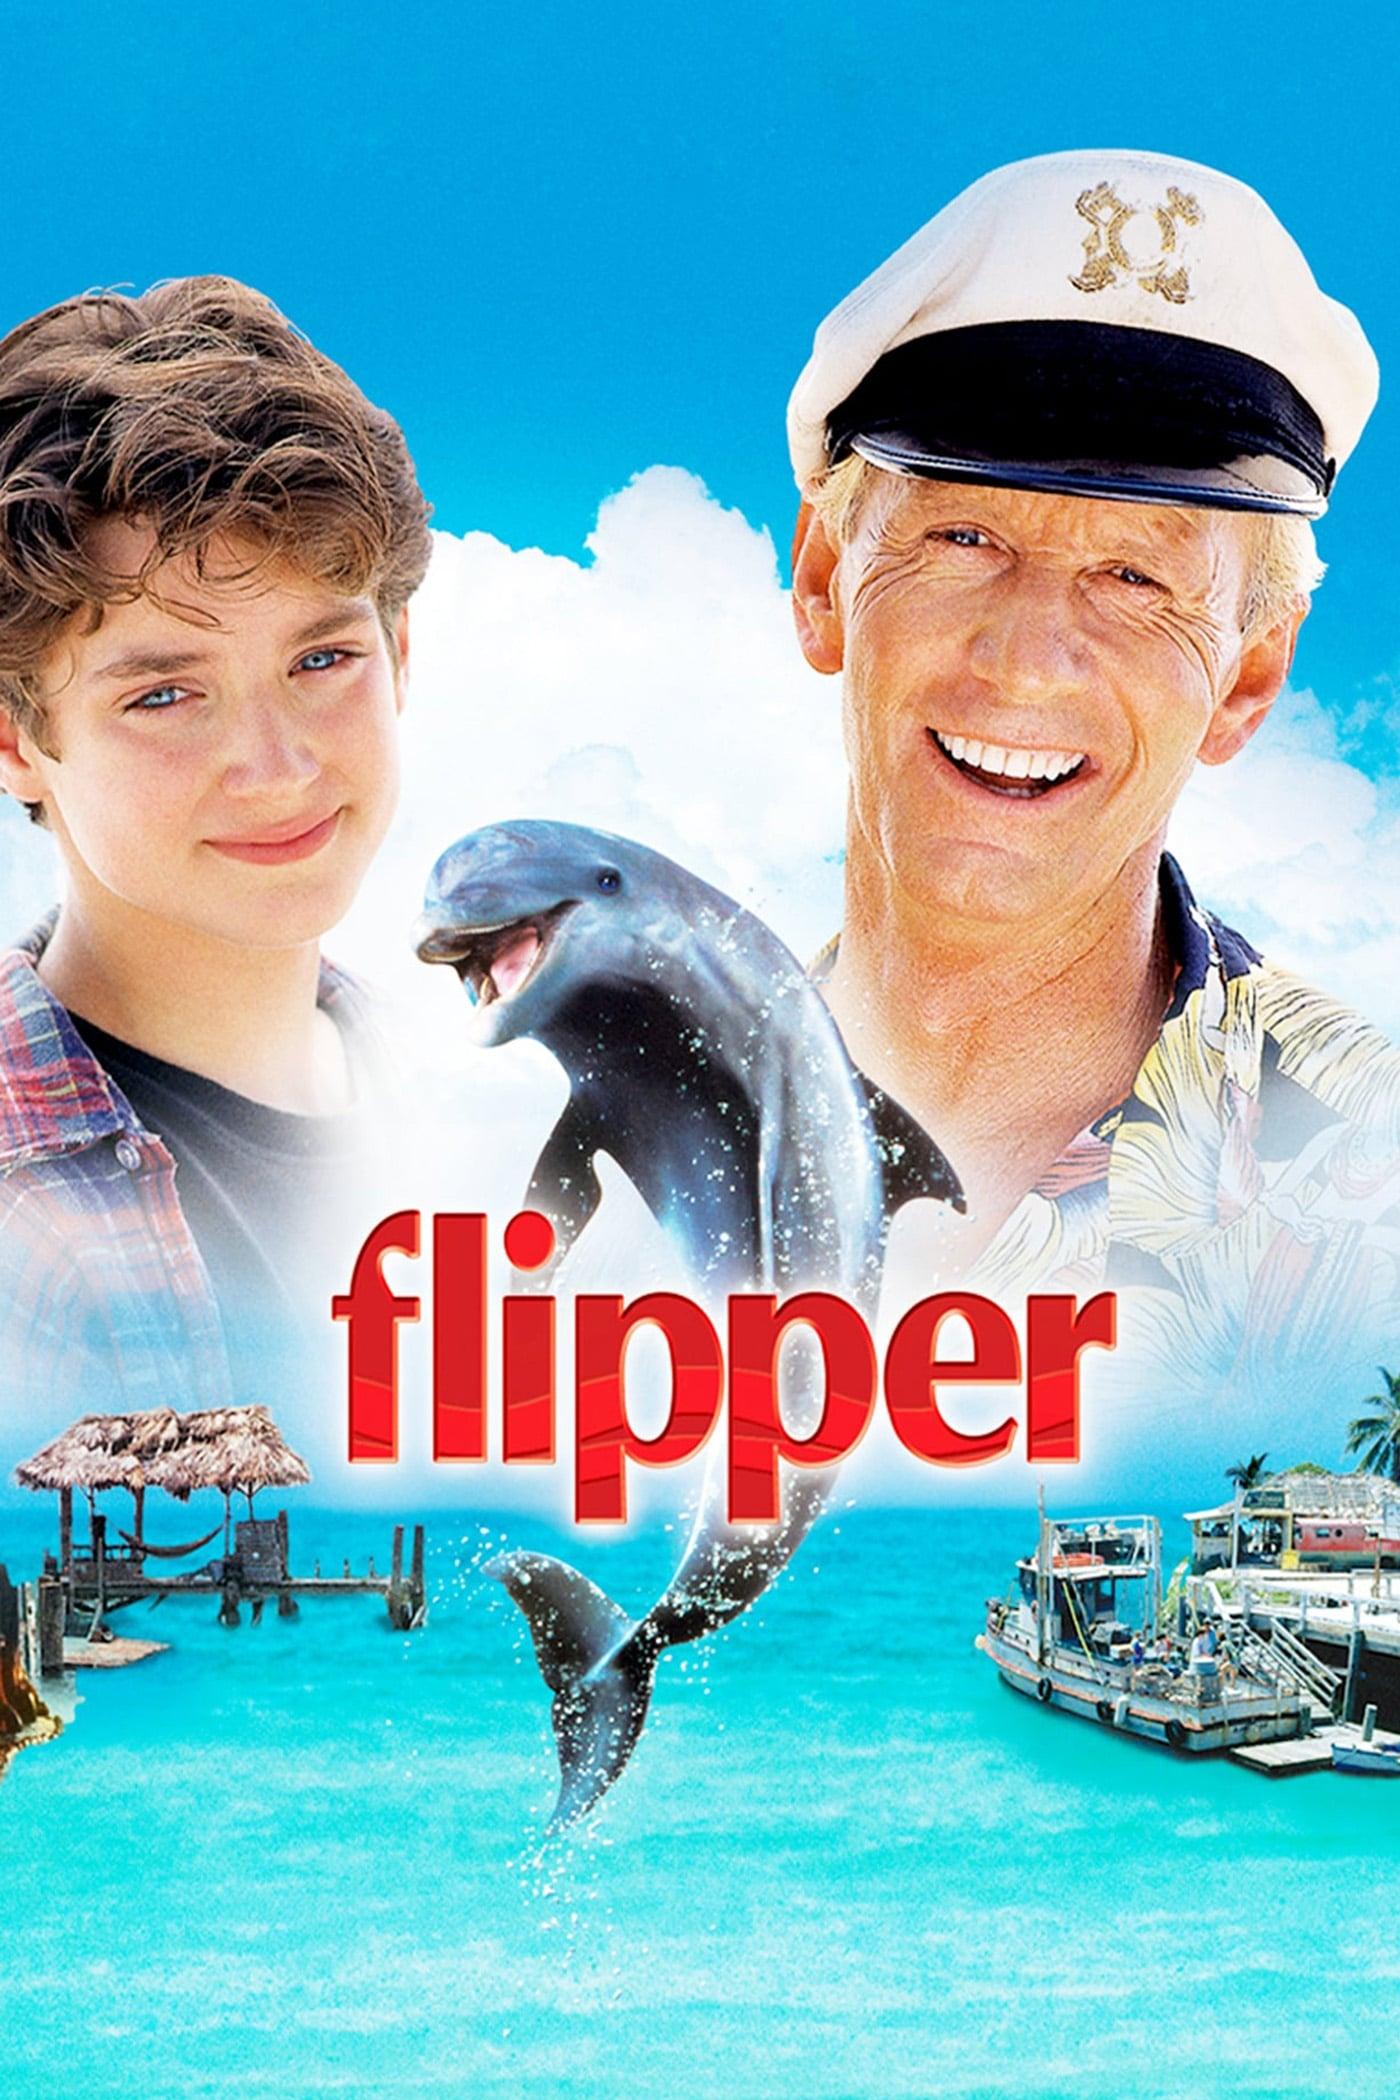 Flipper poster